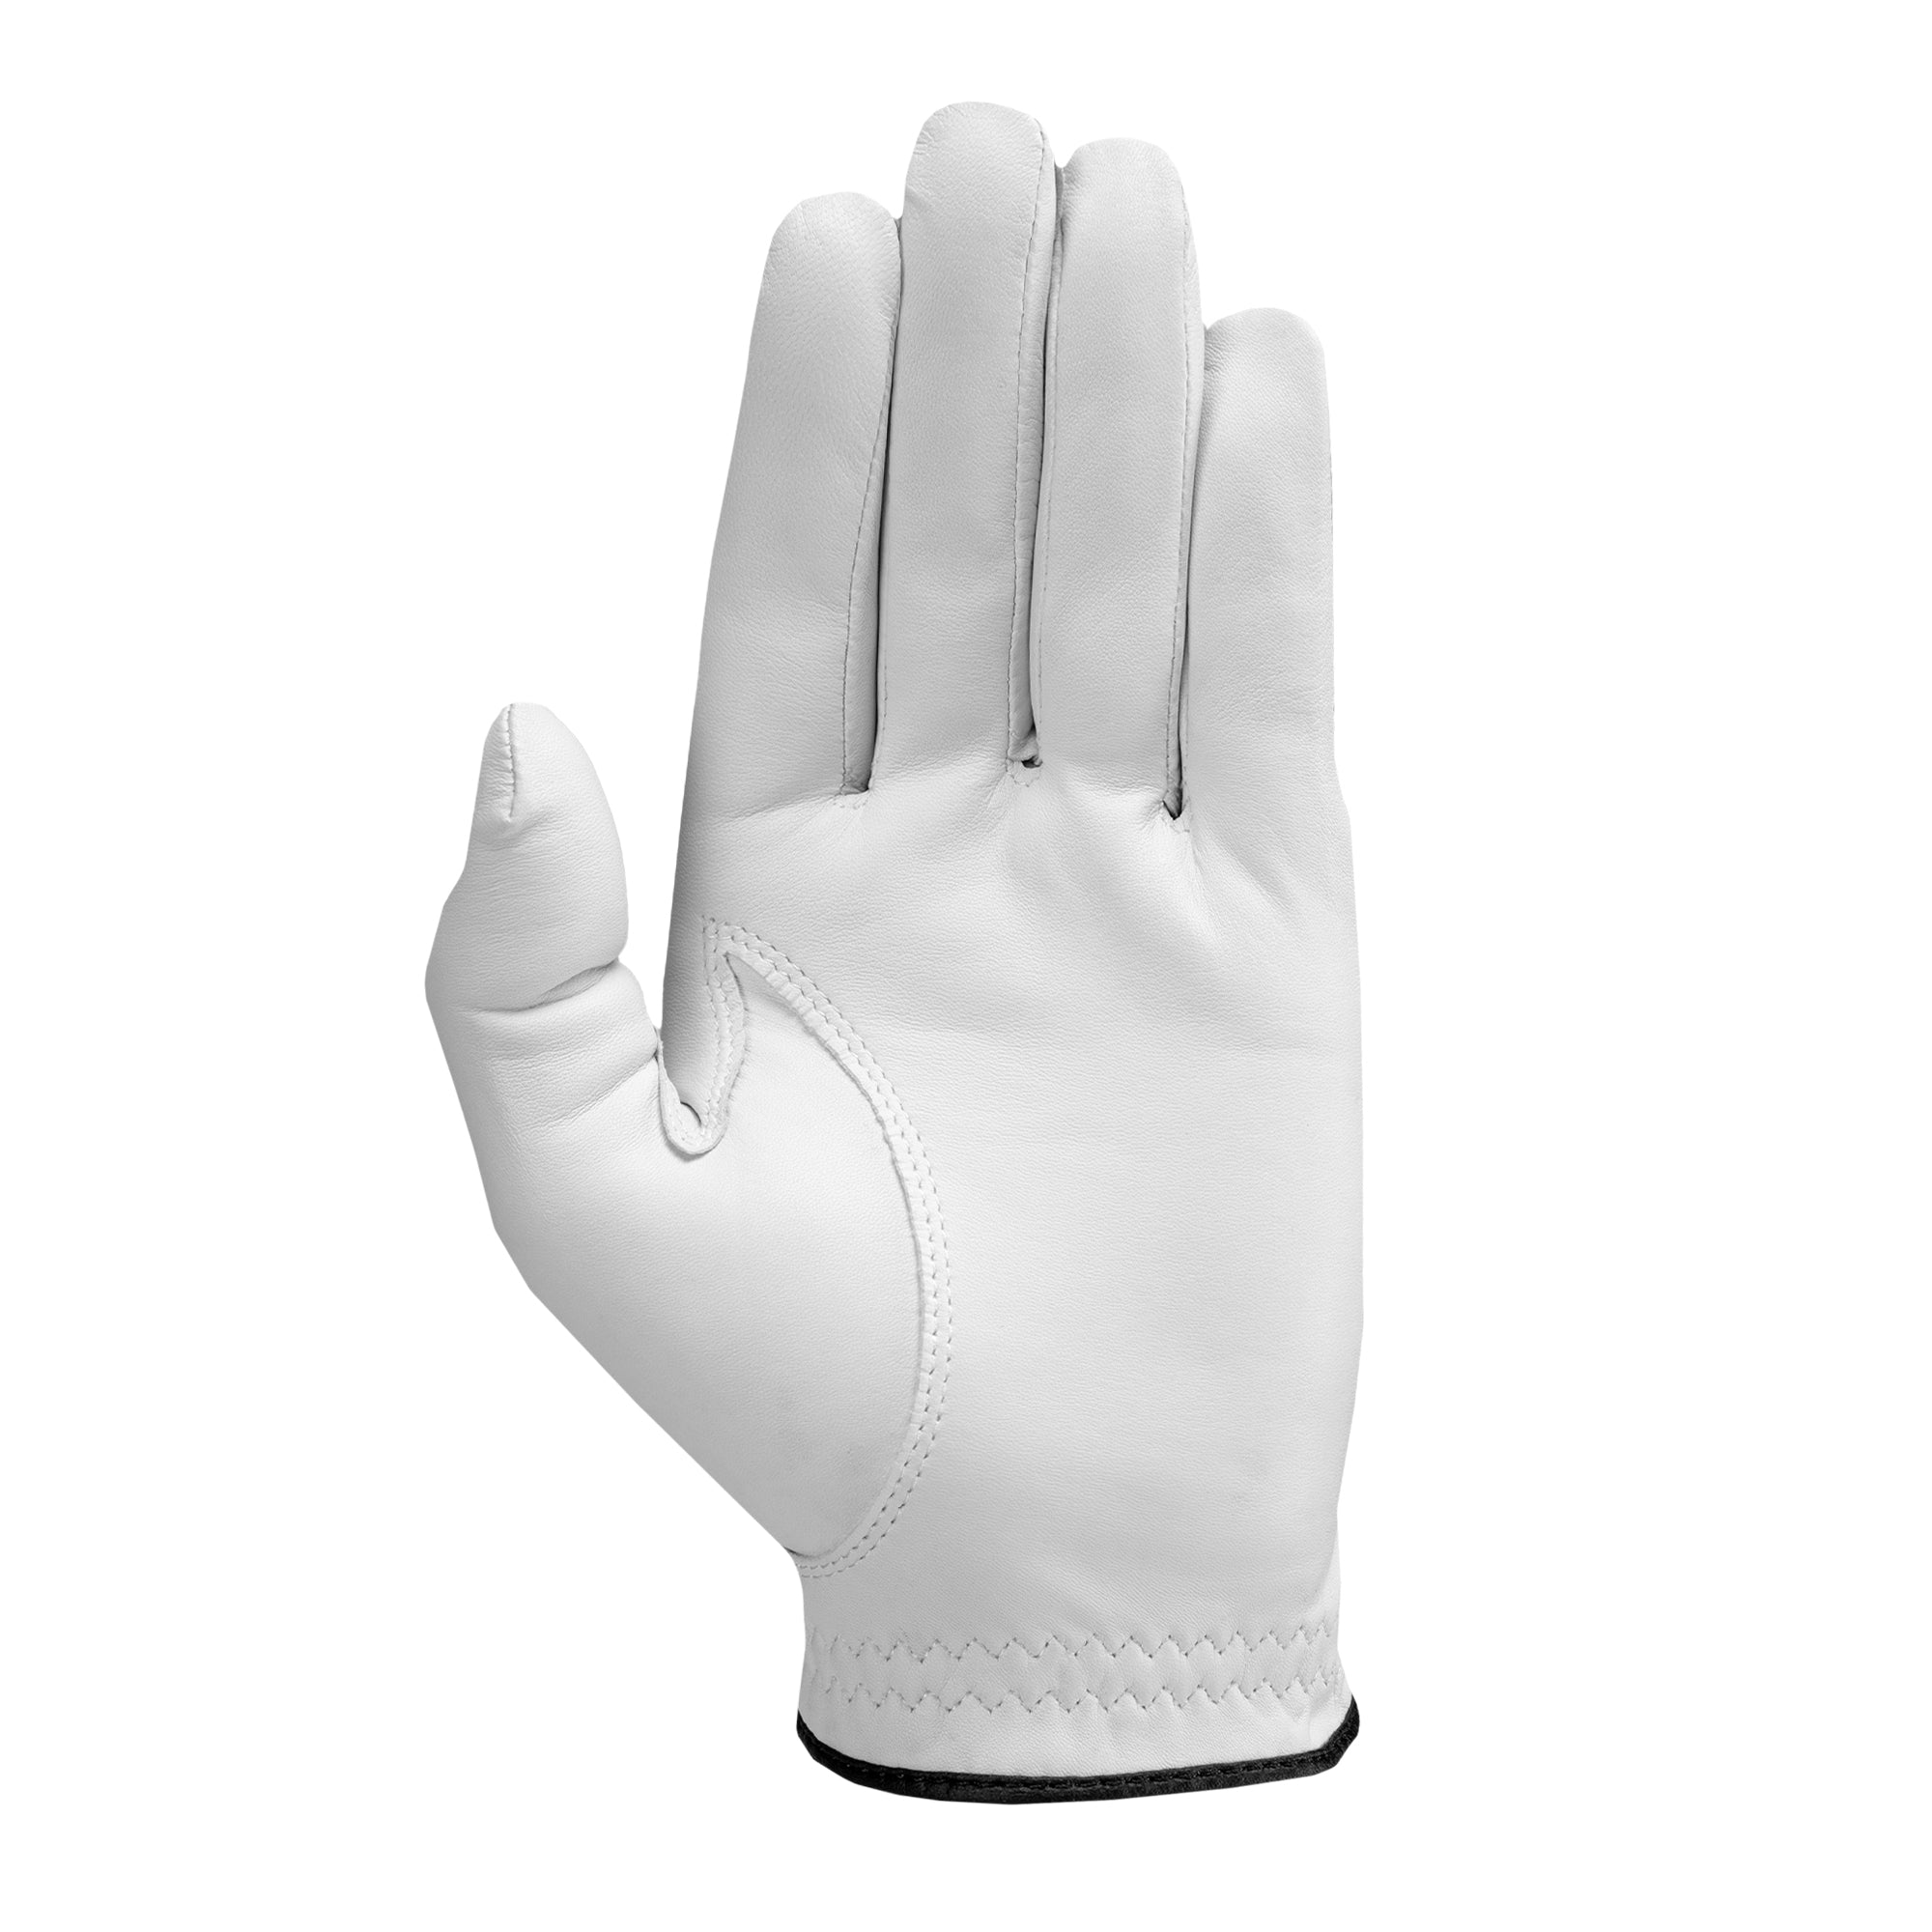 GOLF GODS Men's White Cabretta Leather Golf Glove Single Hand